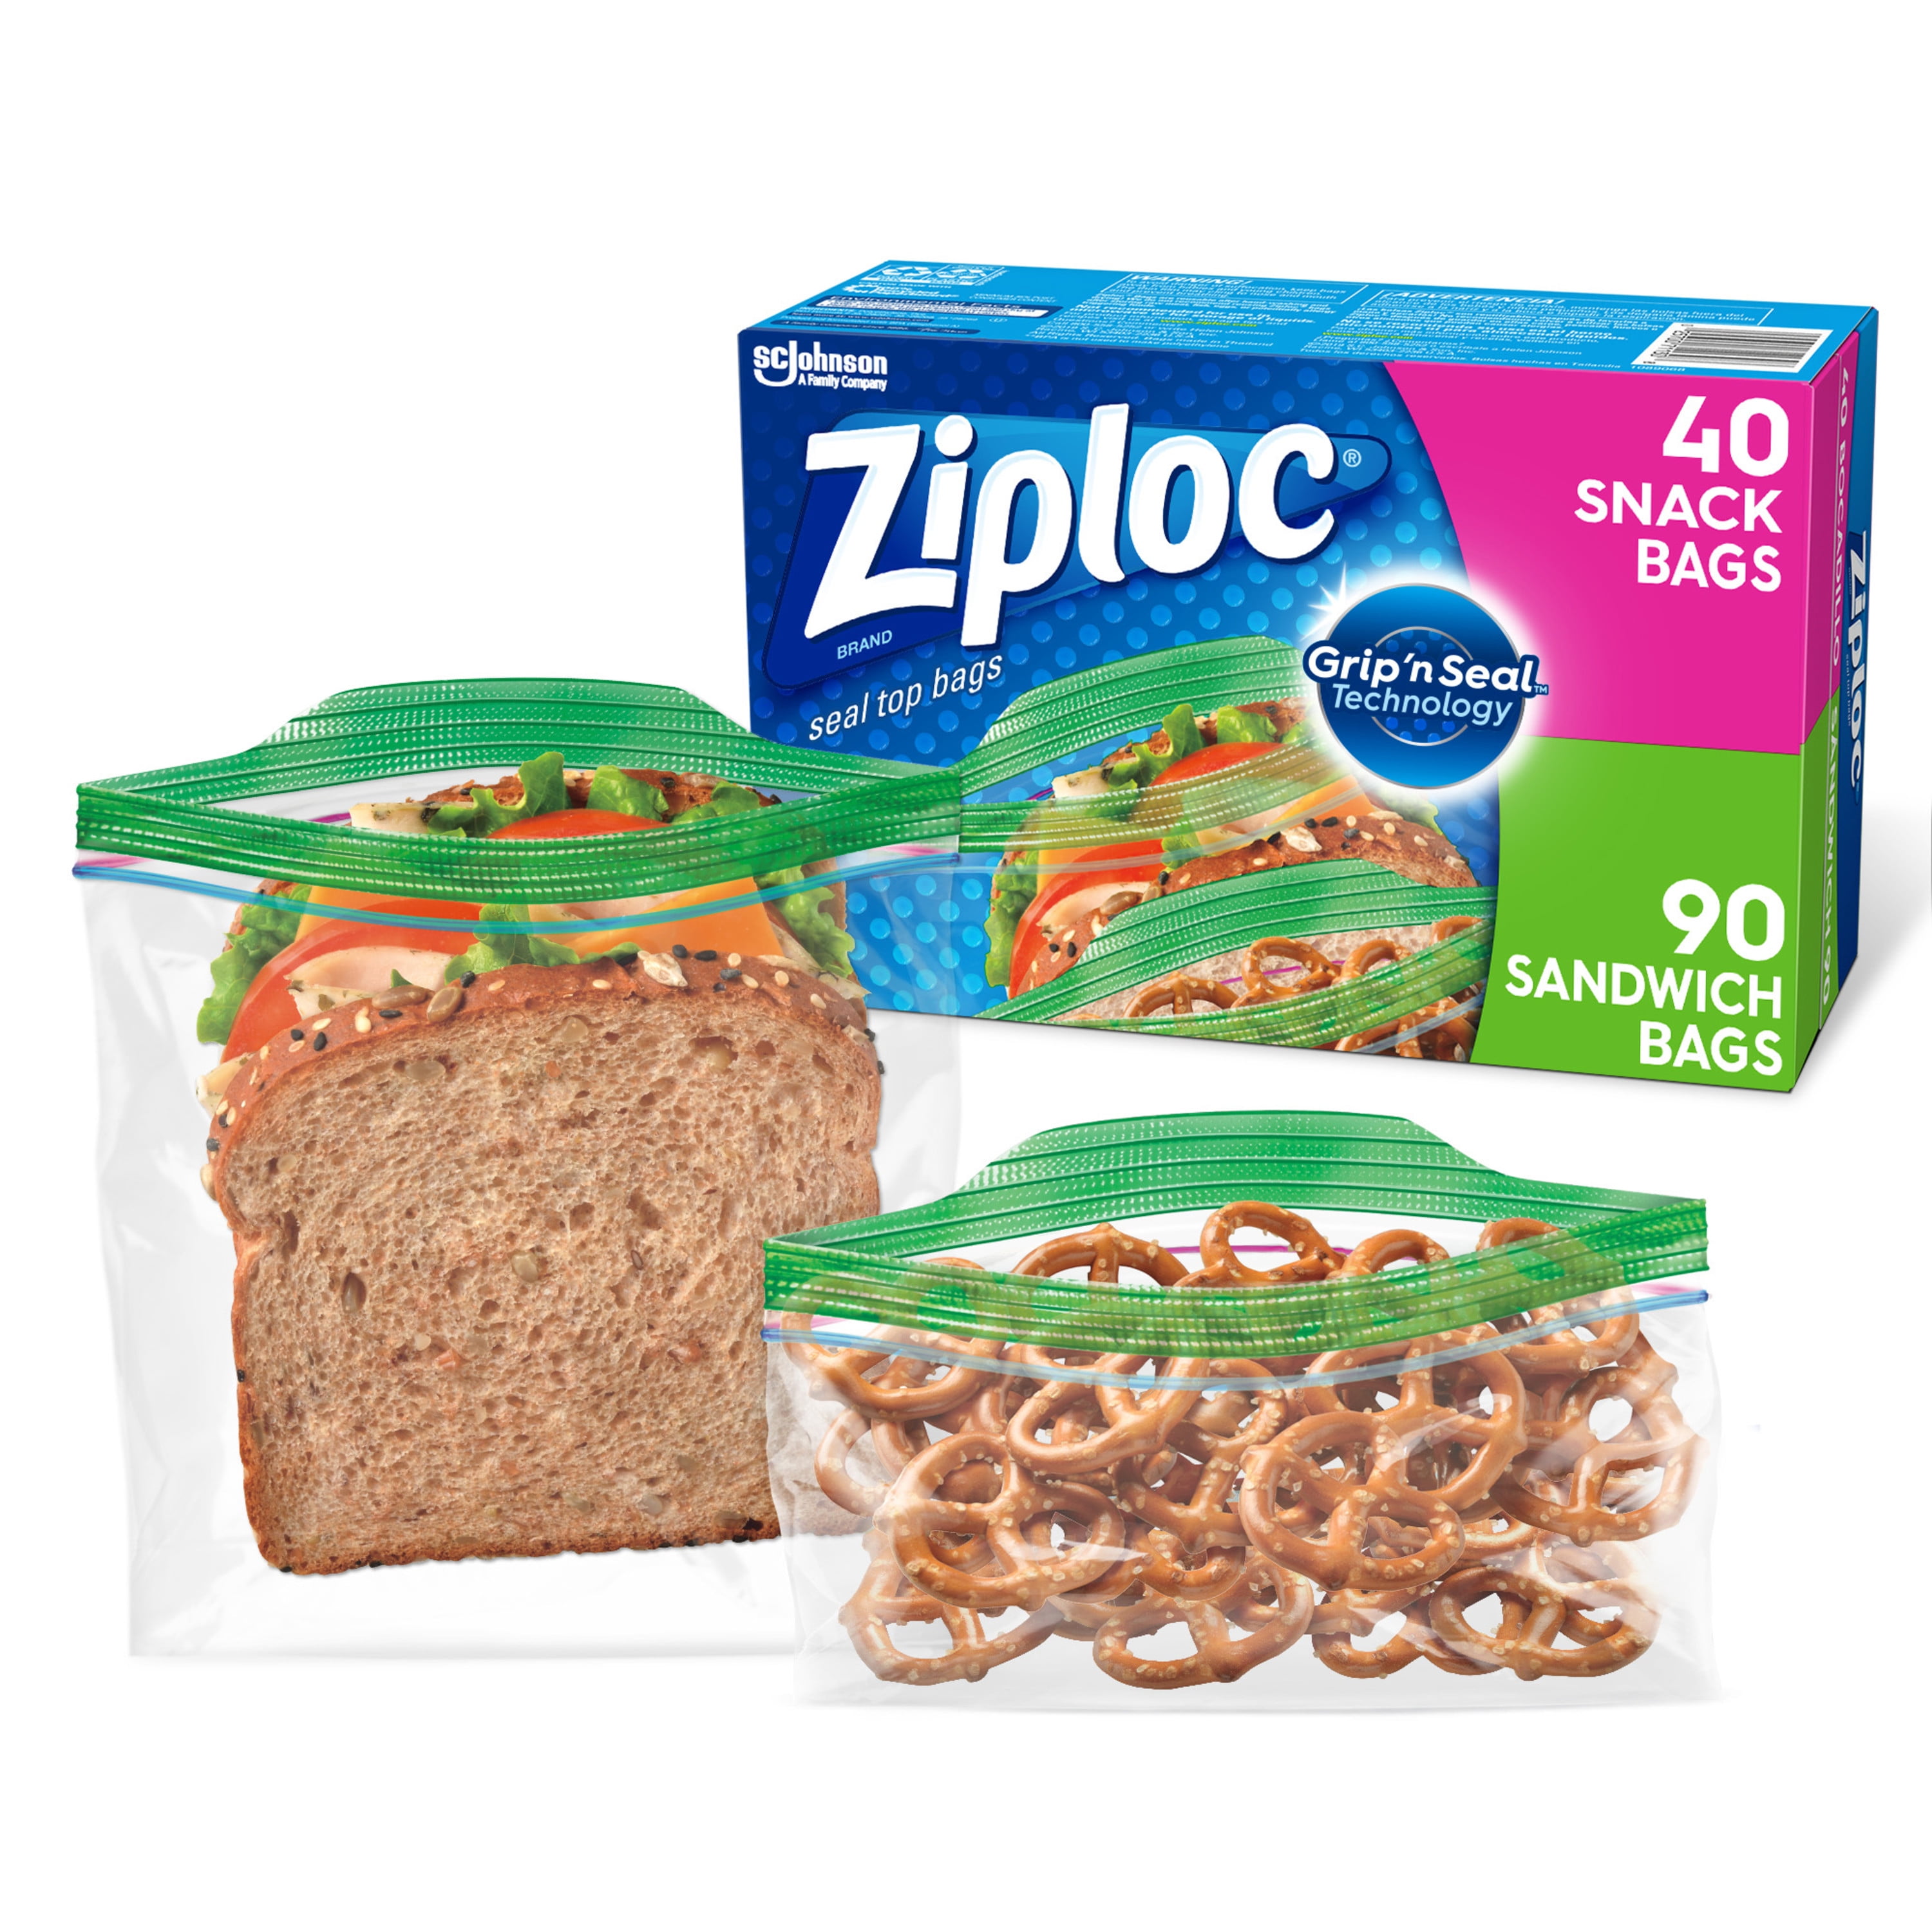 600 Fold Top Sandwich Bags Food Storage Plastic Poly Baggies Snack